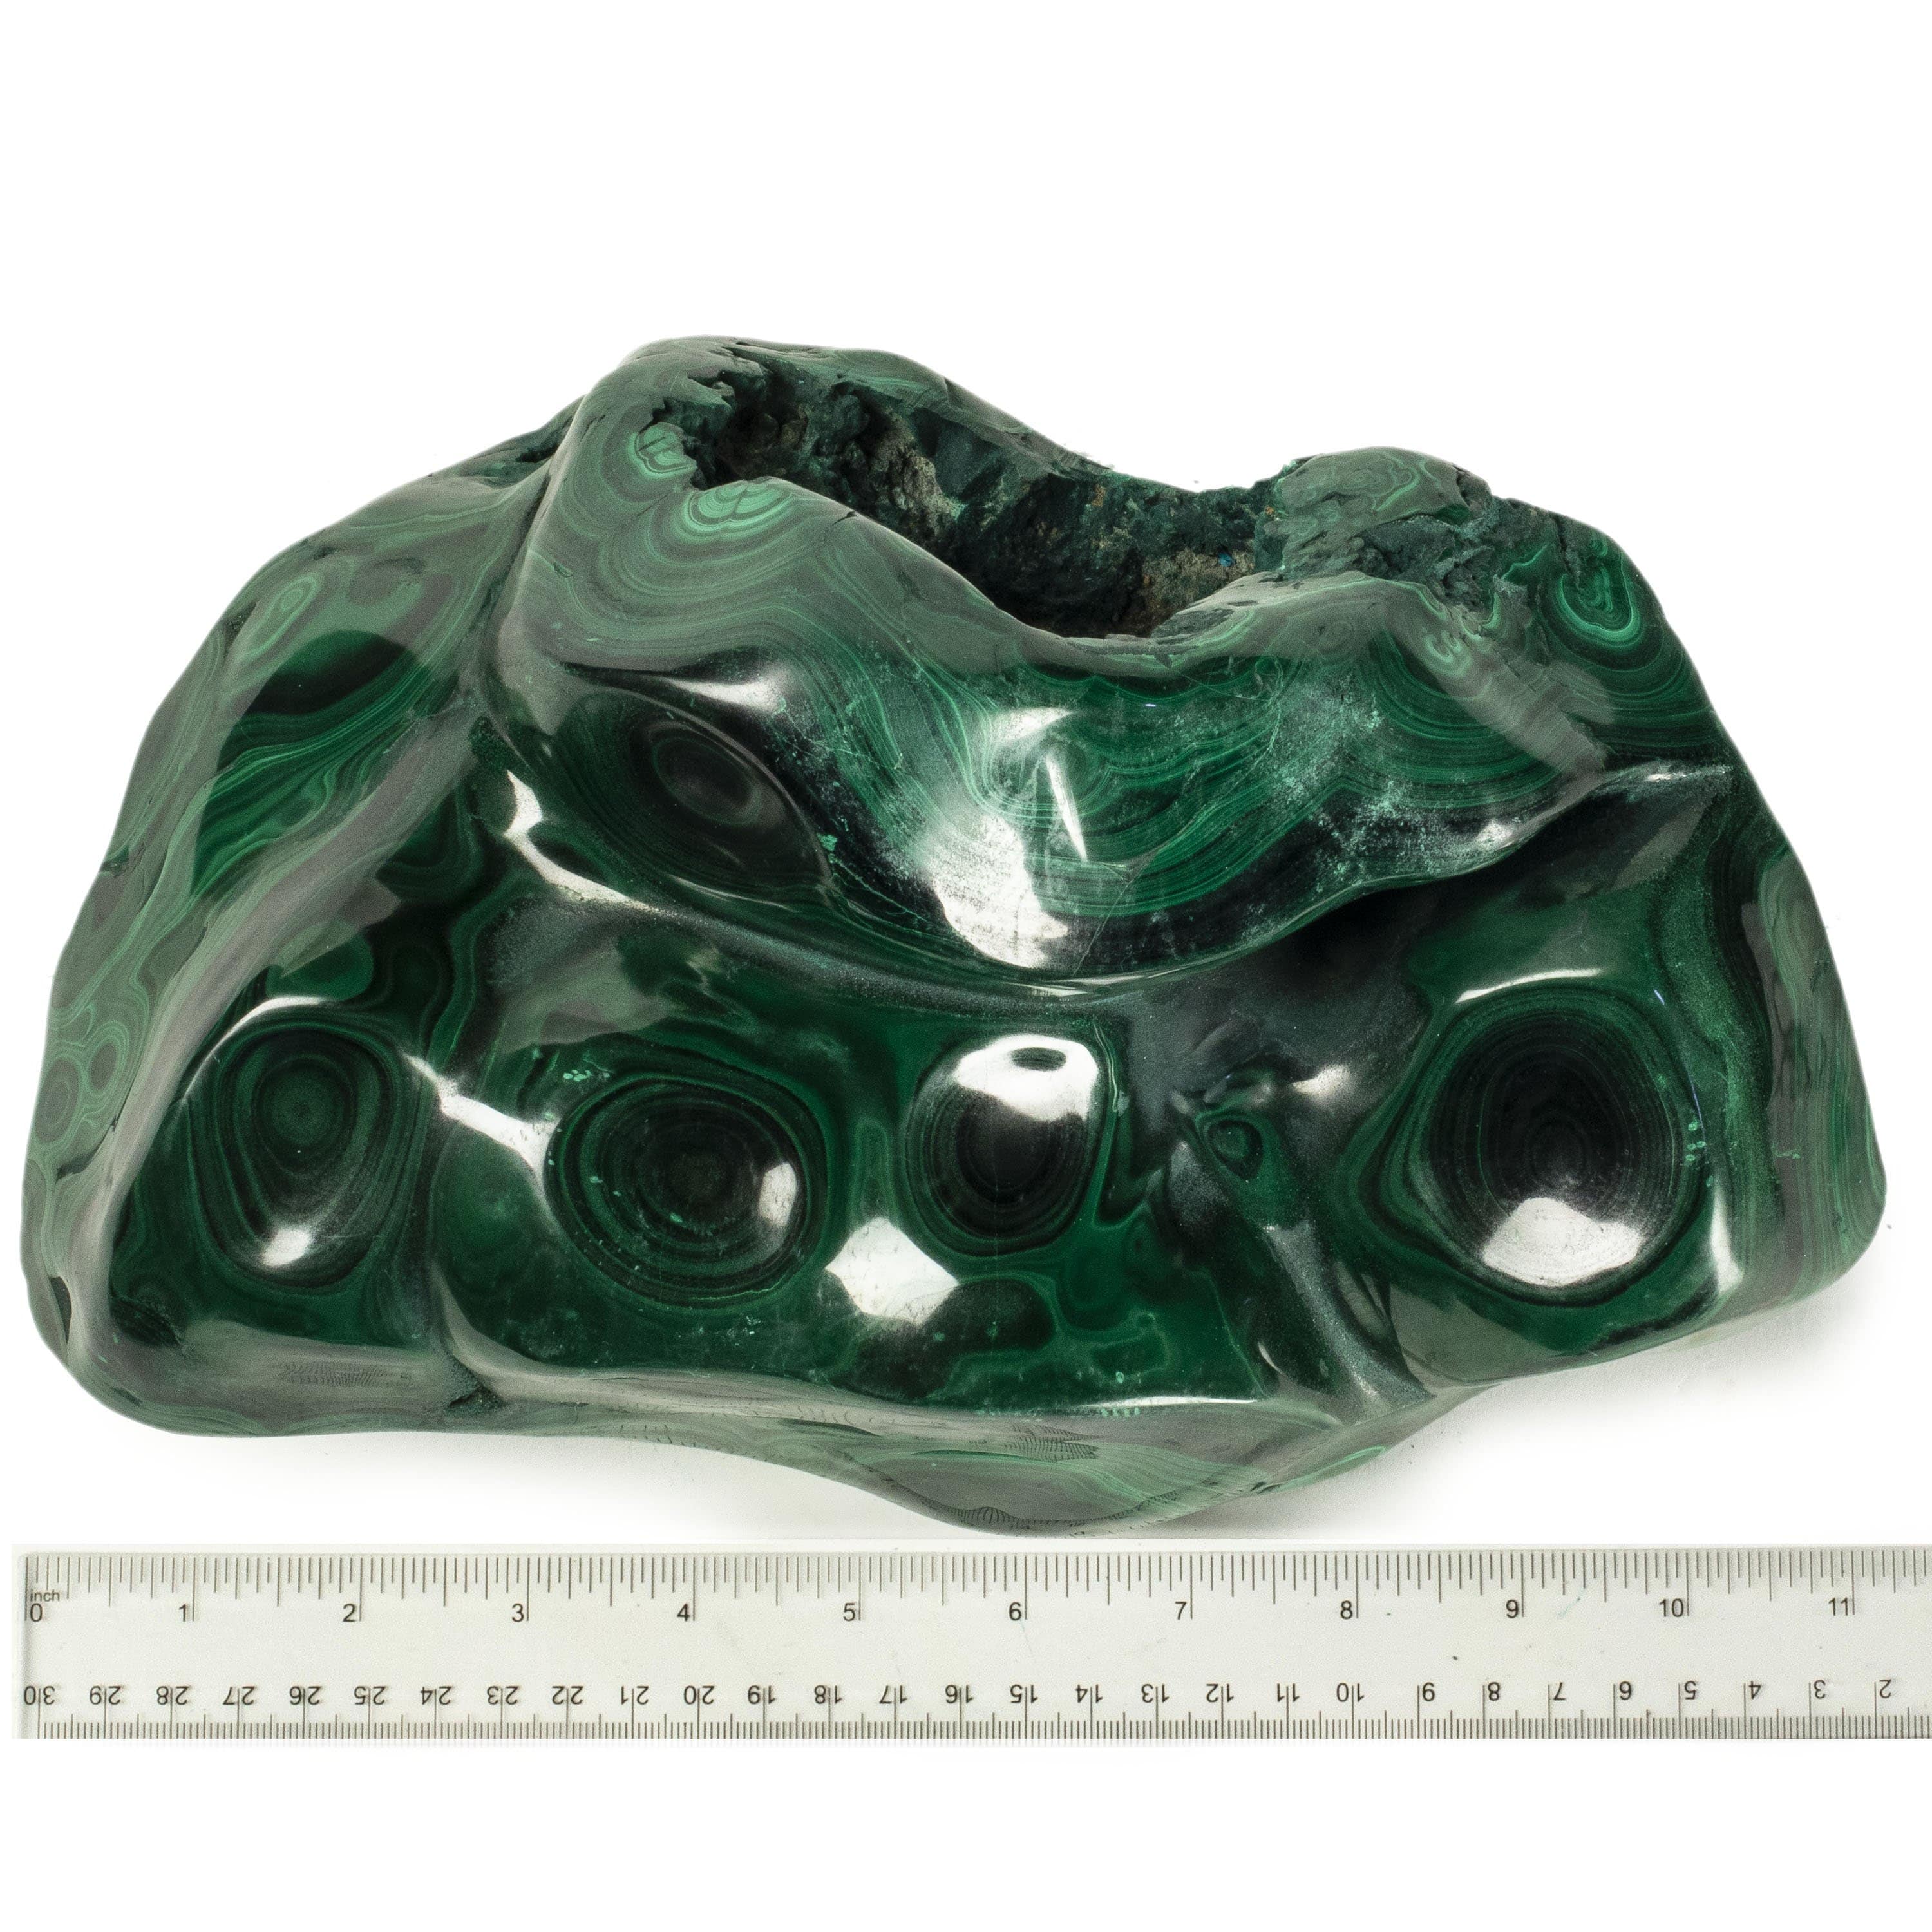 Kalifano Malachite Rare Natural Green Malachite Polished Freeform Specimen from Congo - 8.9 kg / 19.5 lbs MA5850.001